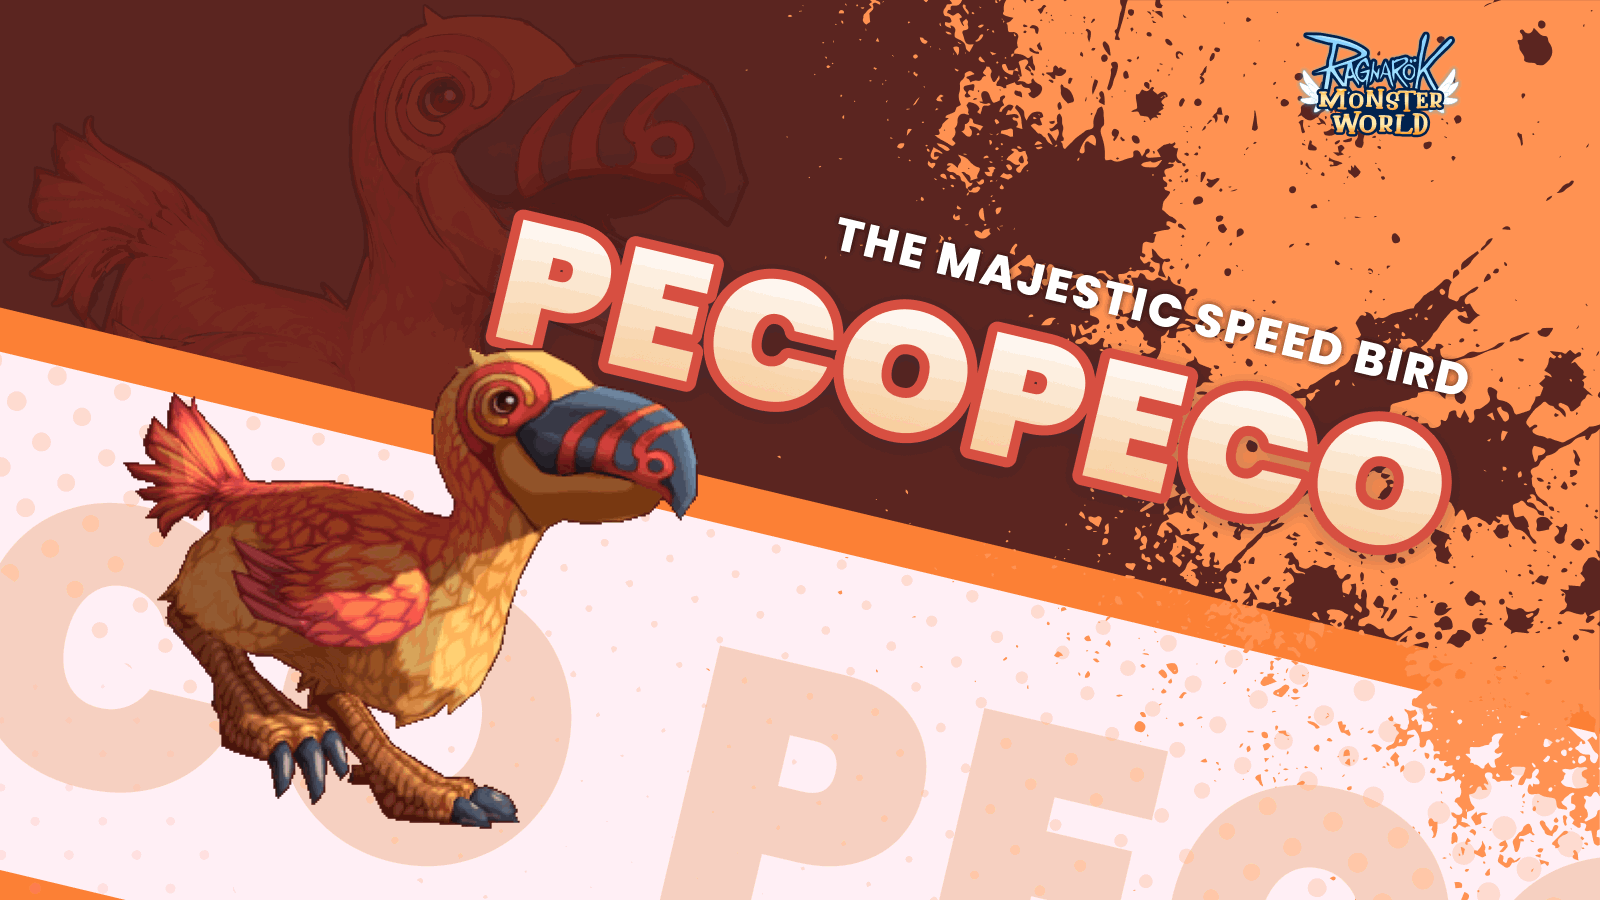 Introducing Pecopeco: The Majestic Speed Bird